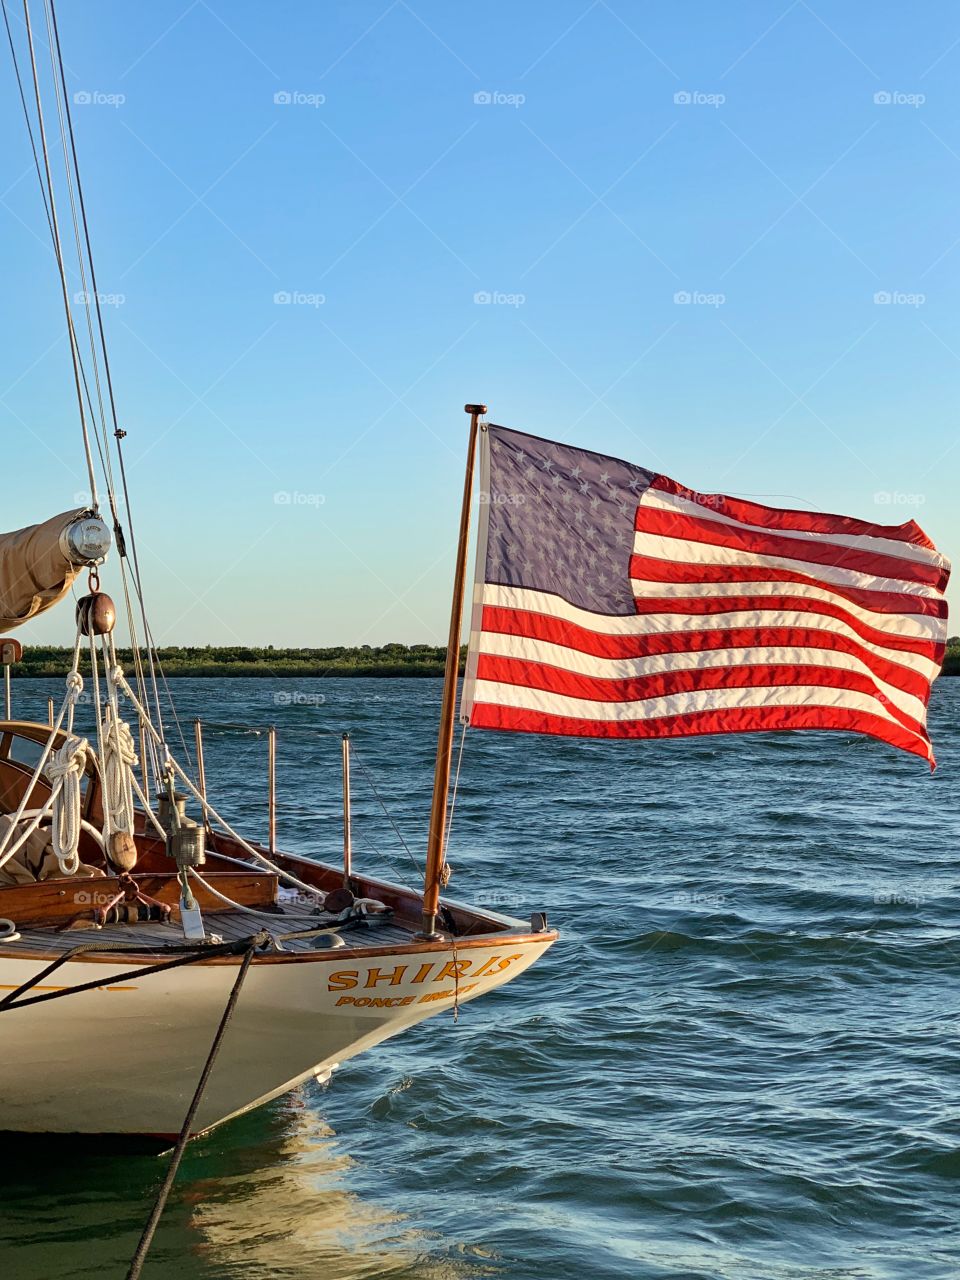 Patriot at sea